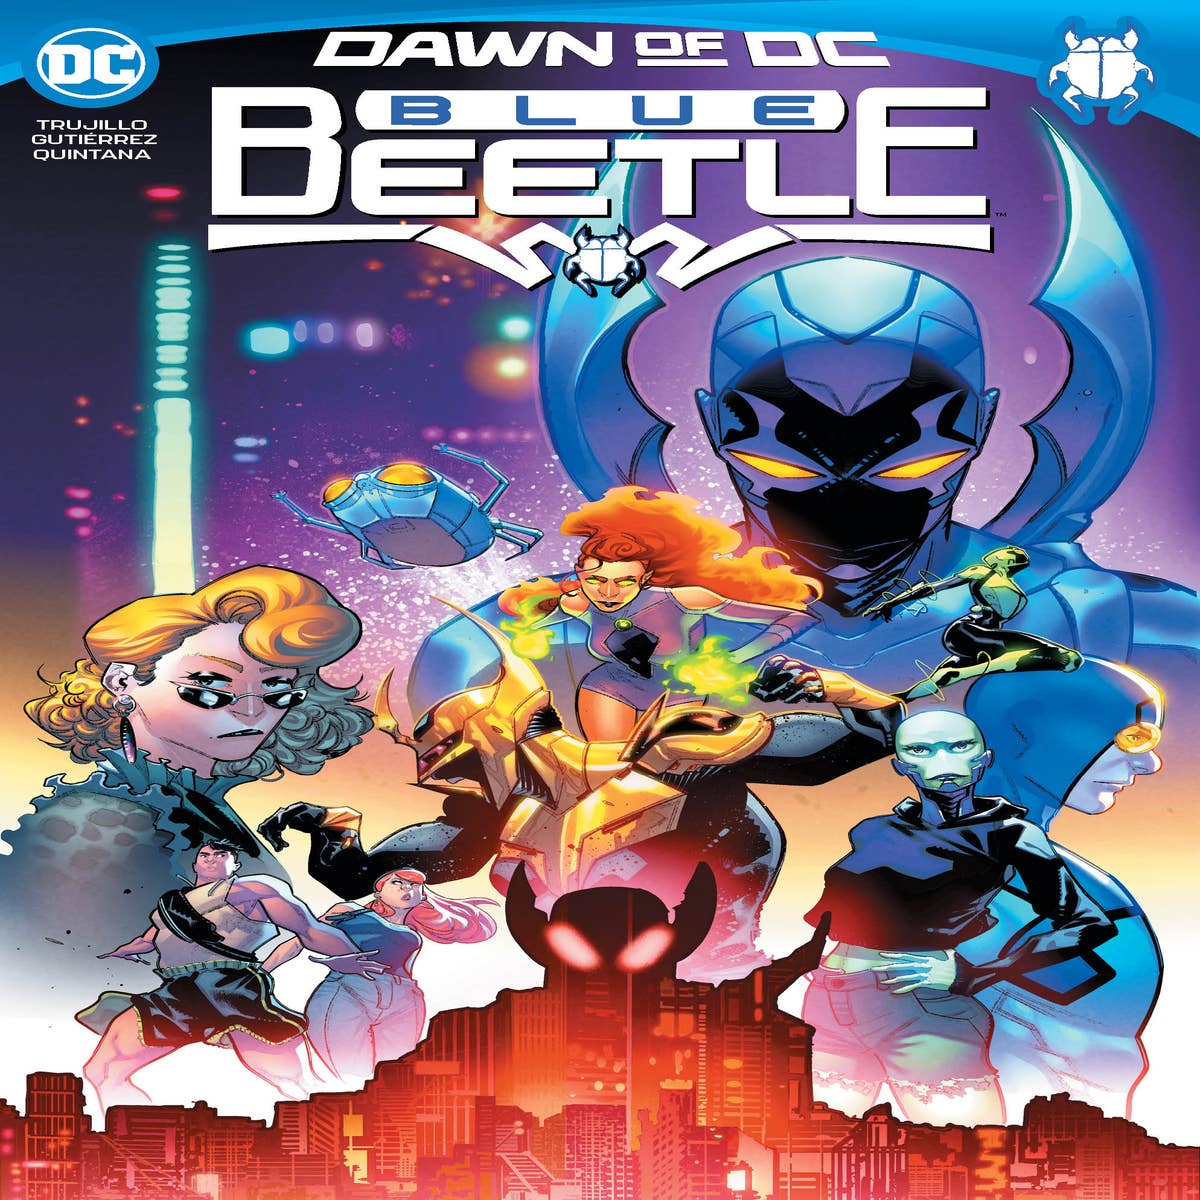 Final Trailer for DC Comics' 'Blue Beetle